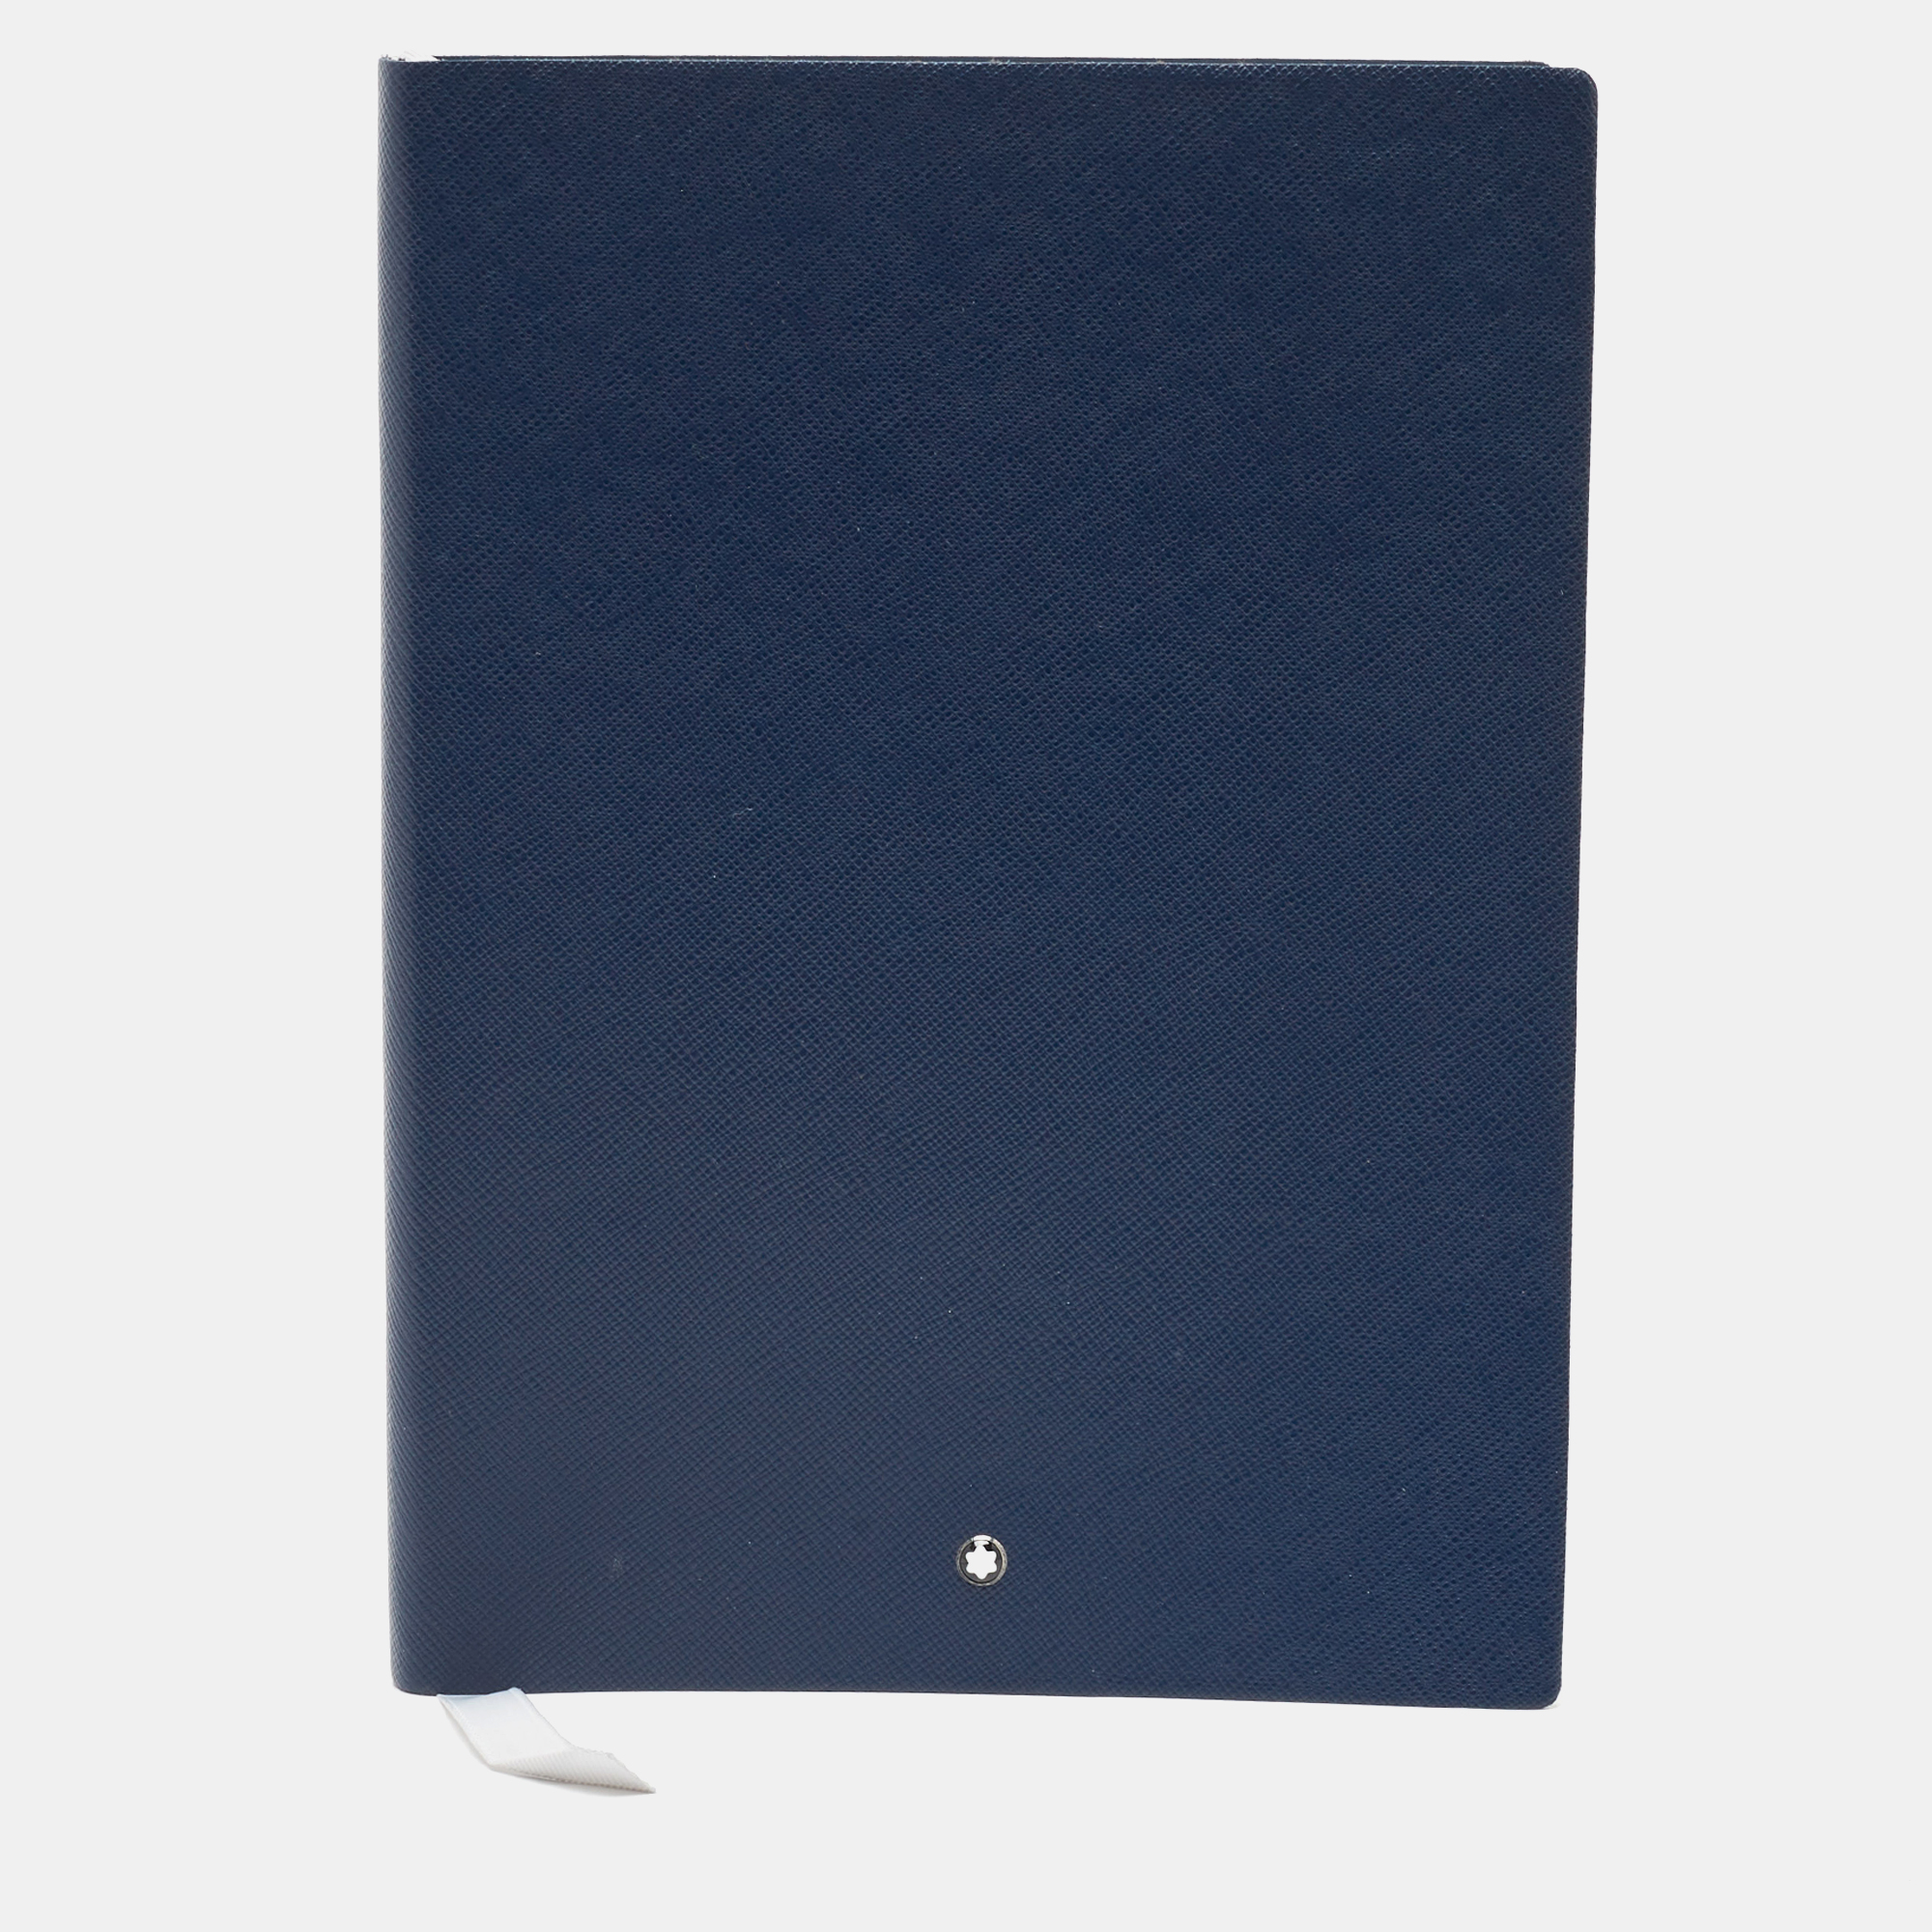 Montblanc navy blue leather fine stationery notebook